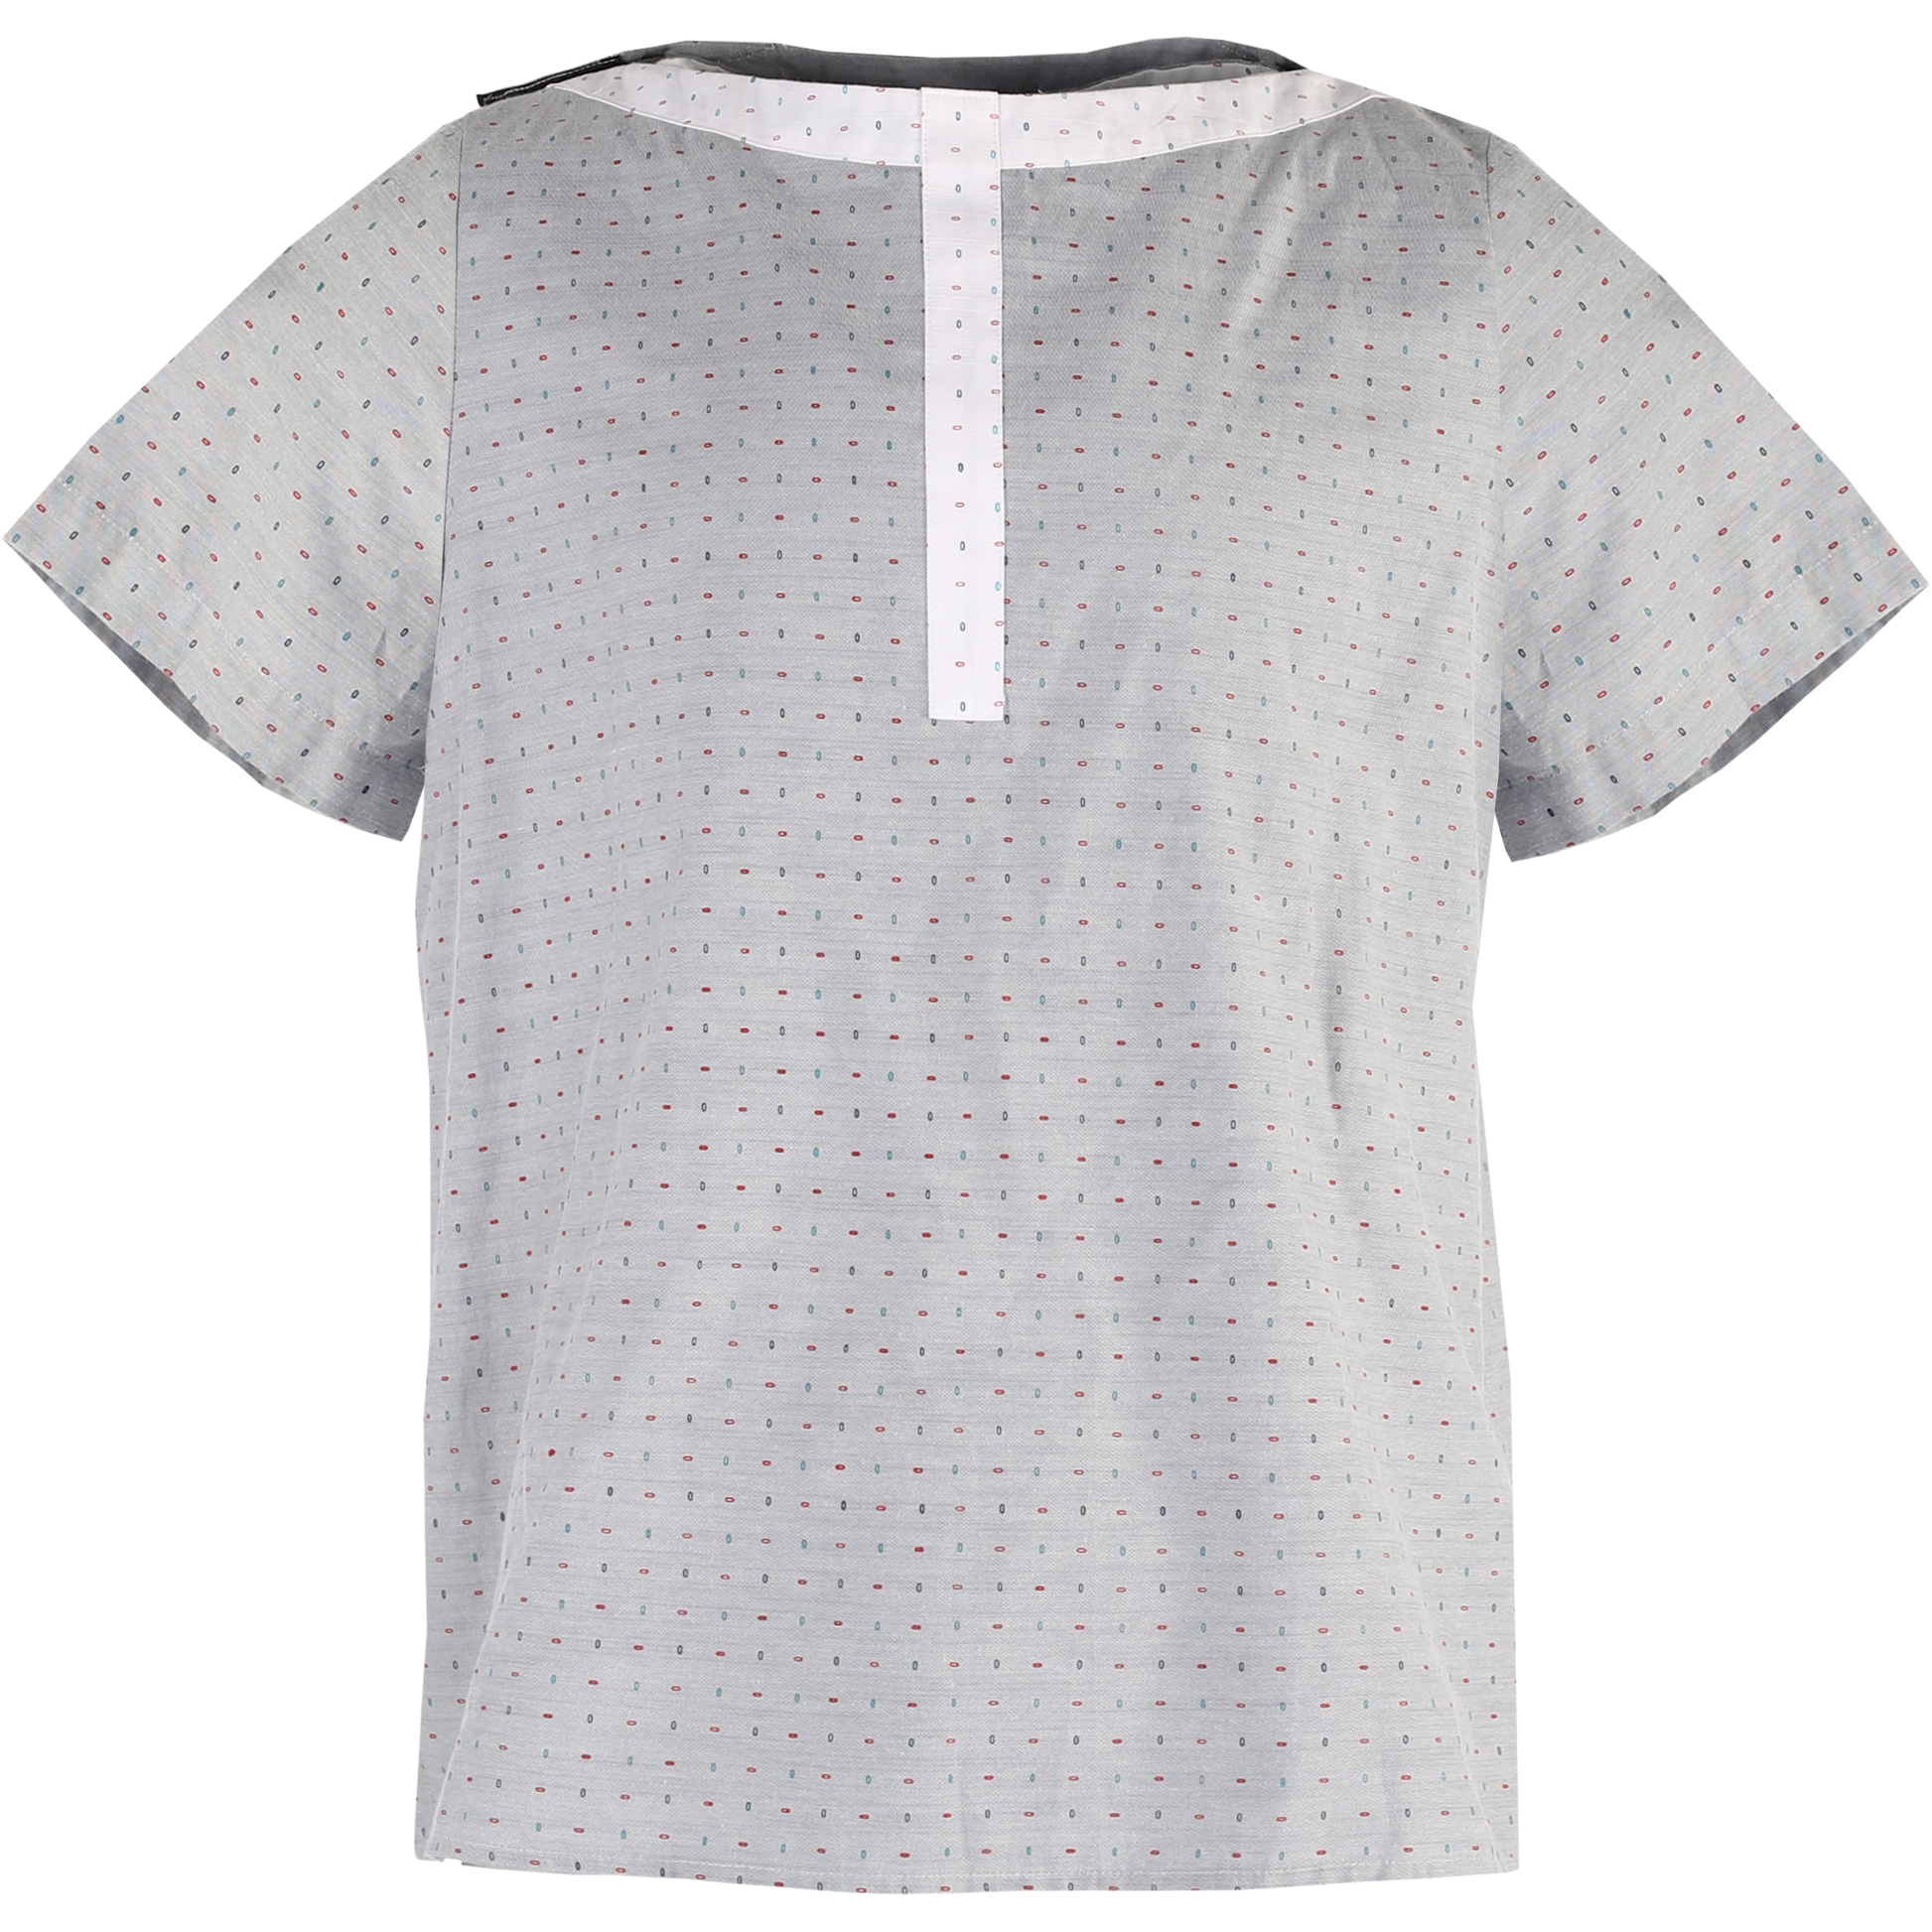 Grey Inpatient Adaptive Pyjama Top — Hospital & Nursing Home uniforms by CYC